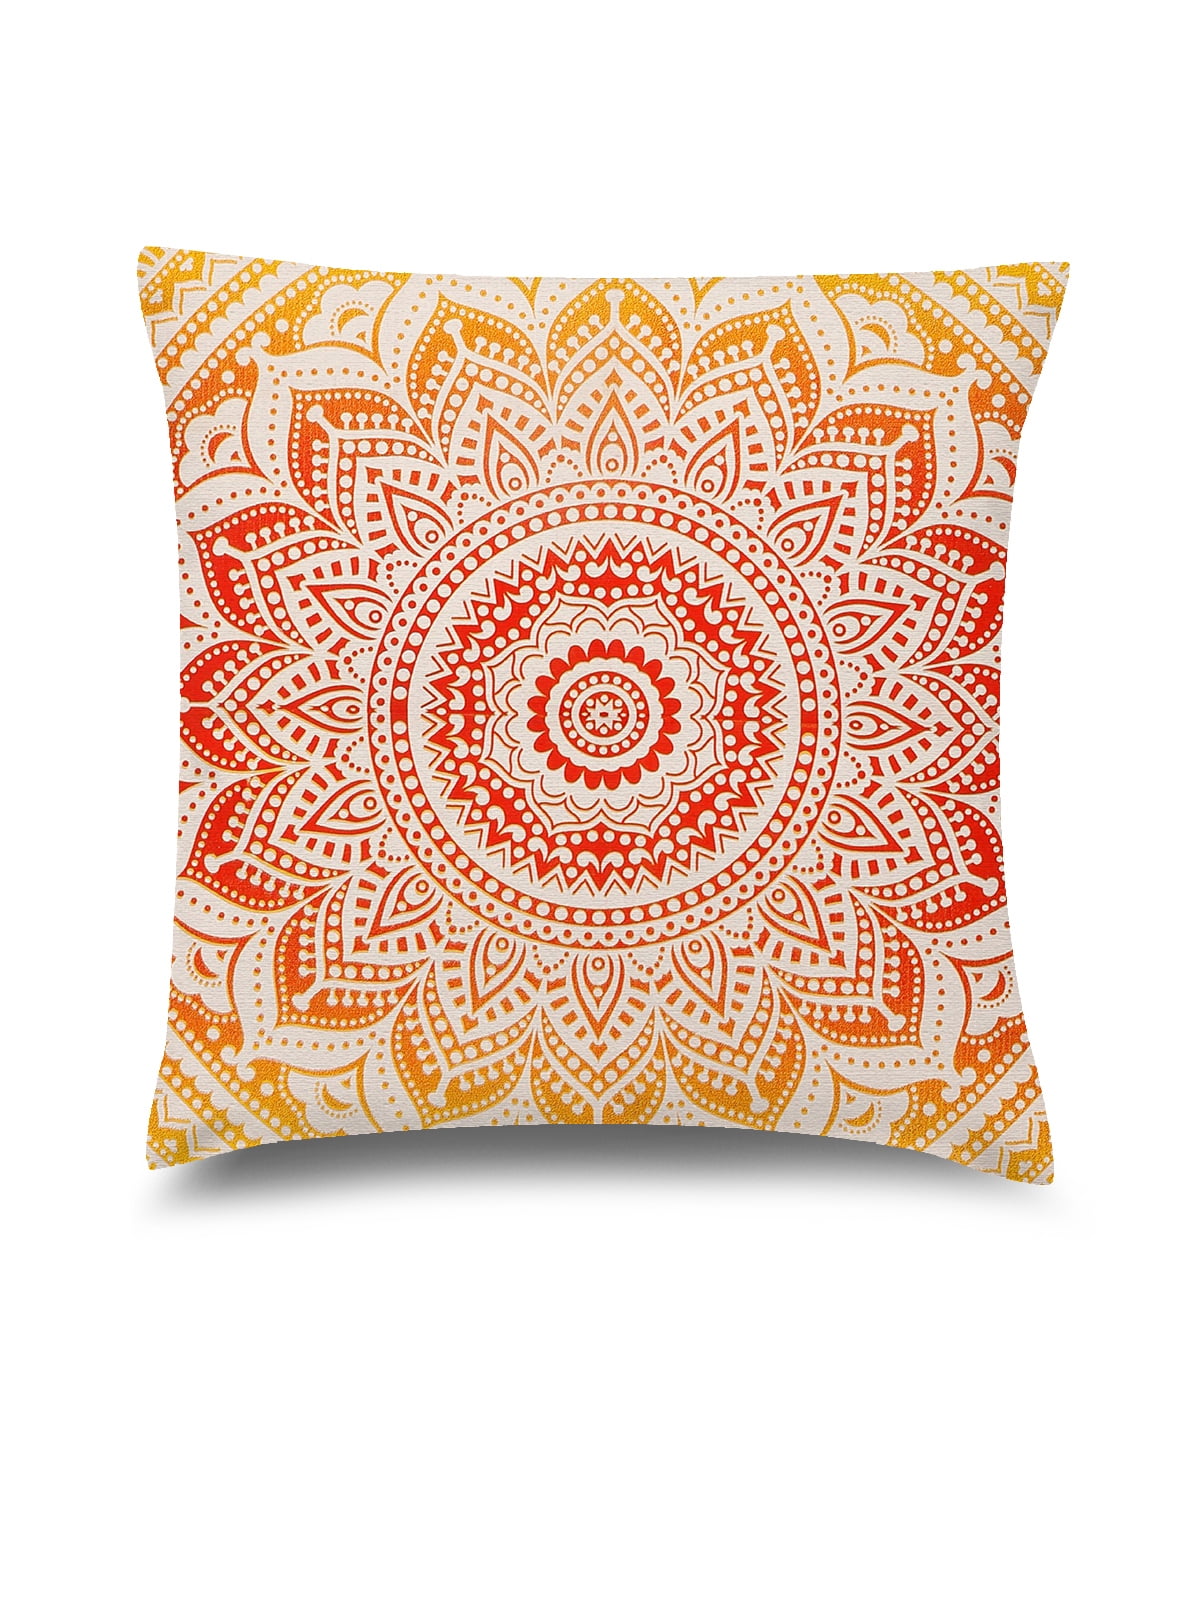 Cotton Indian Small Cushion Cover Set Of 4Pcs Feather Peacock Mandala Bohemian 